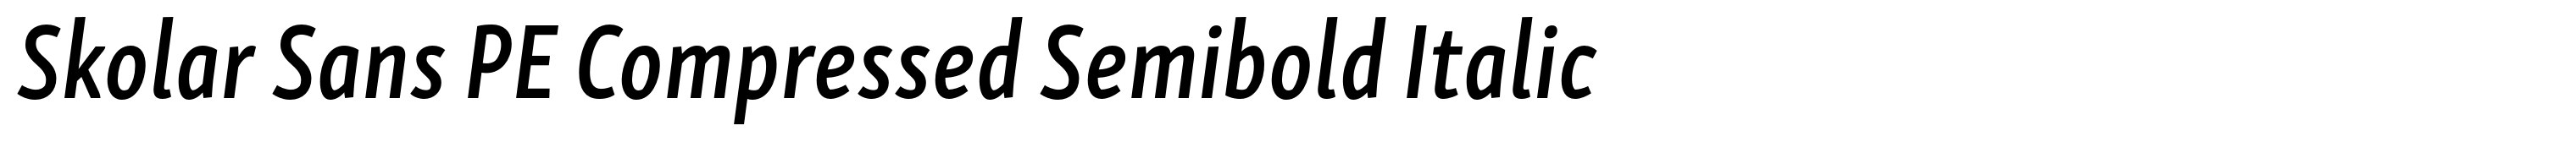 Skolar Sans PE Compressed Semibold Italic